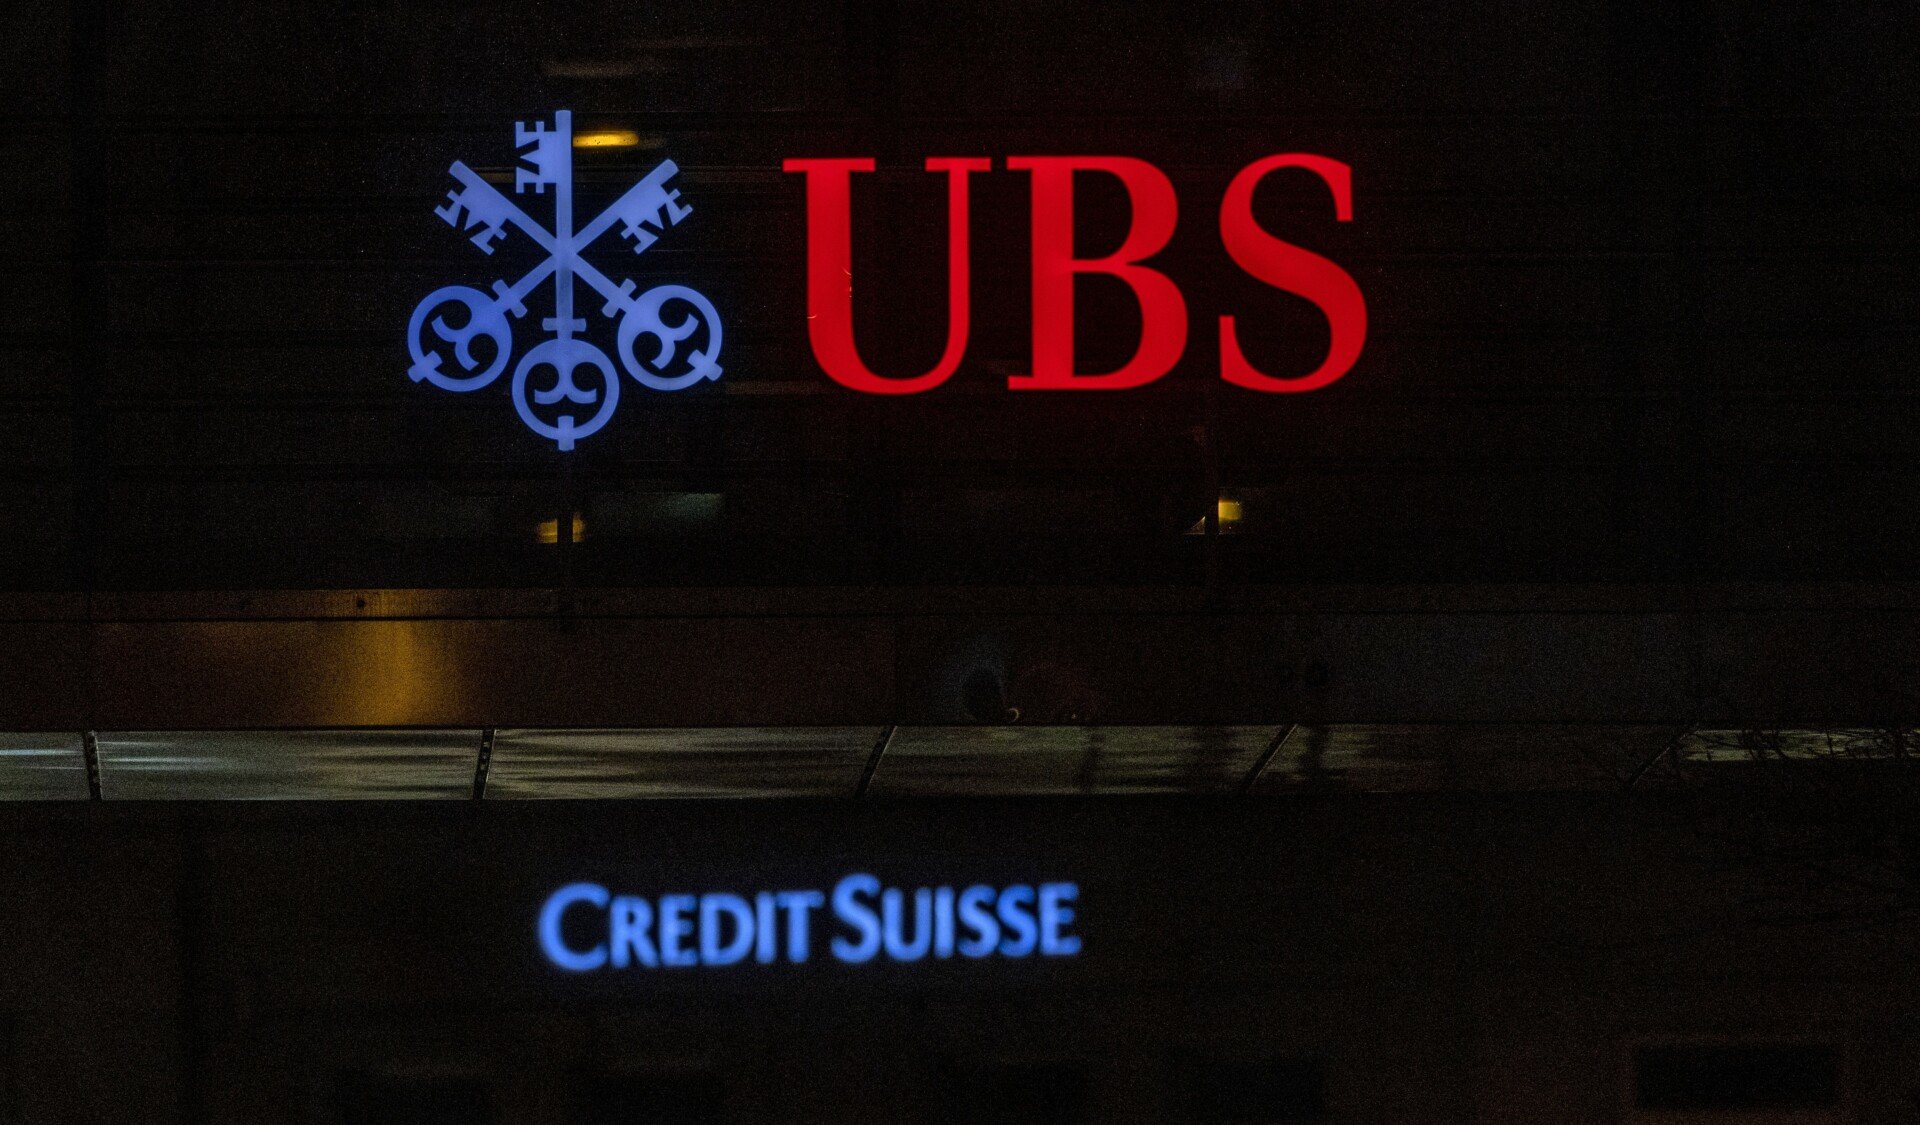 credit-suisse-–-ubs:-Ο-μόνος-μεγάλος-κερδισμένος-και-οι-πολλοί-χαμένοι